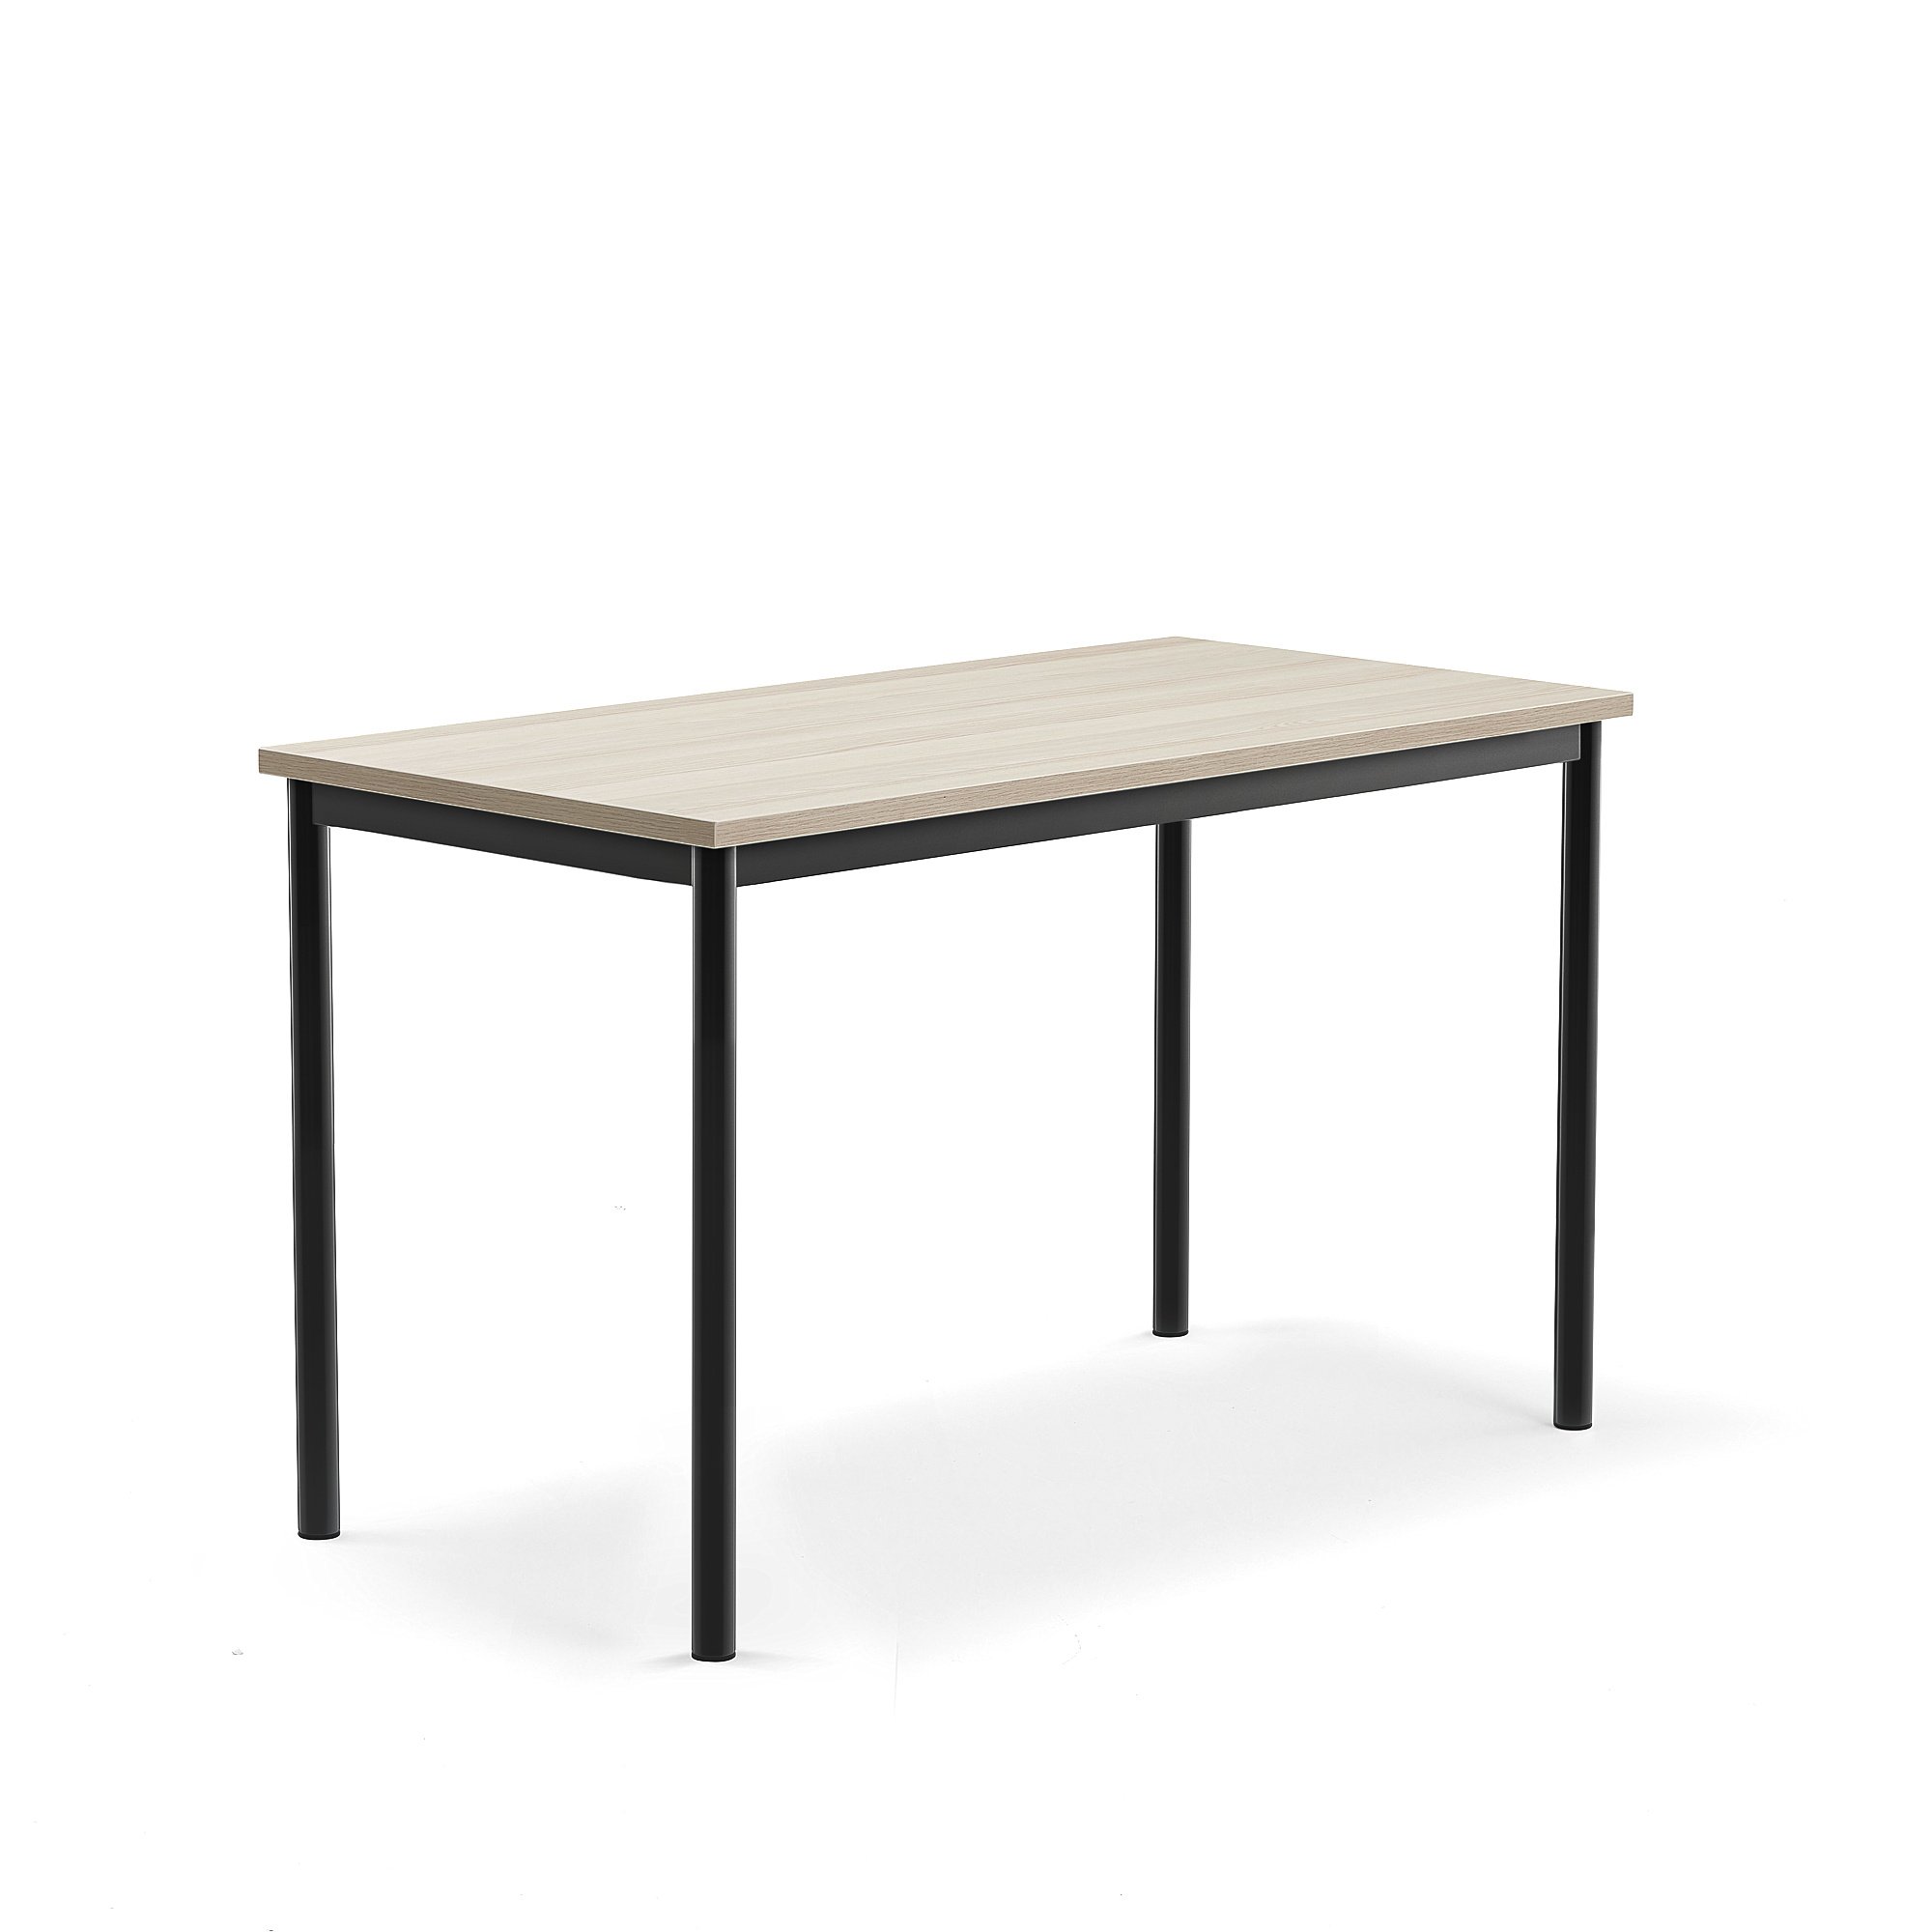 Stůl BORÅS PLUS, 1200x600x720 mm, antracitově šedé nohy, HPL deska, jasan